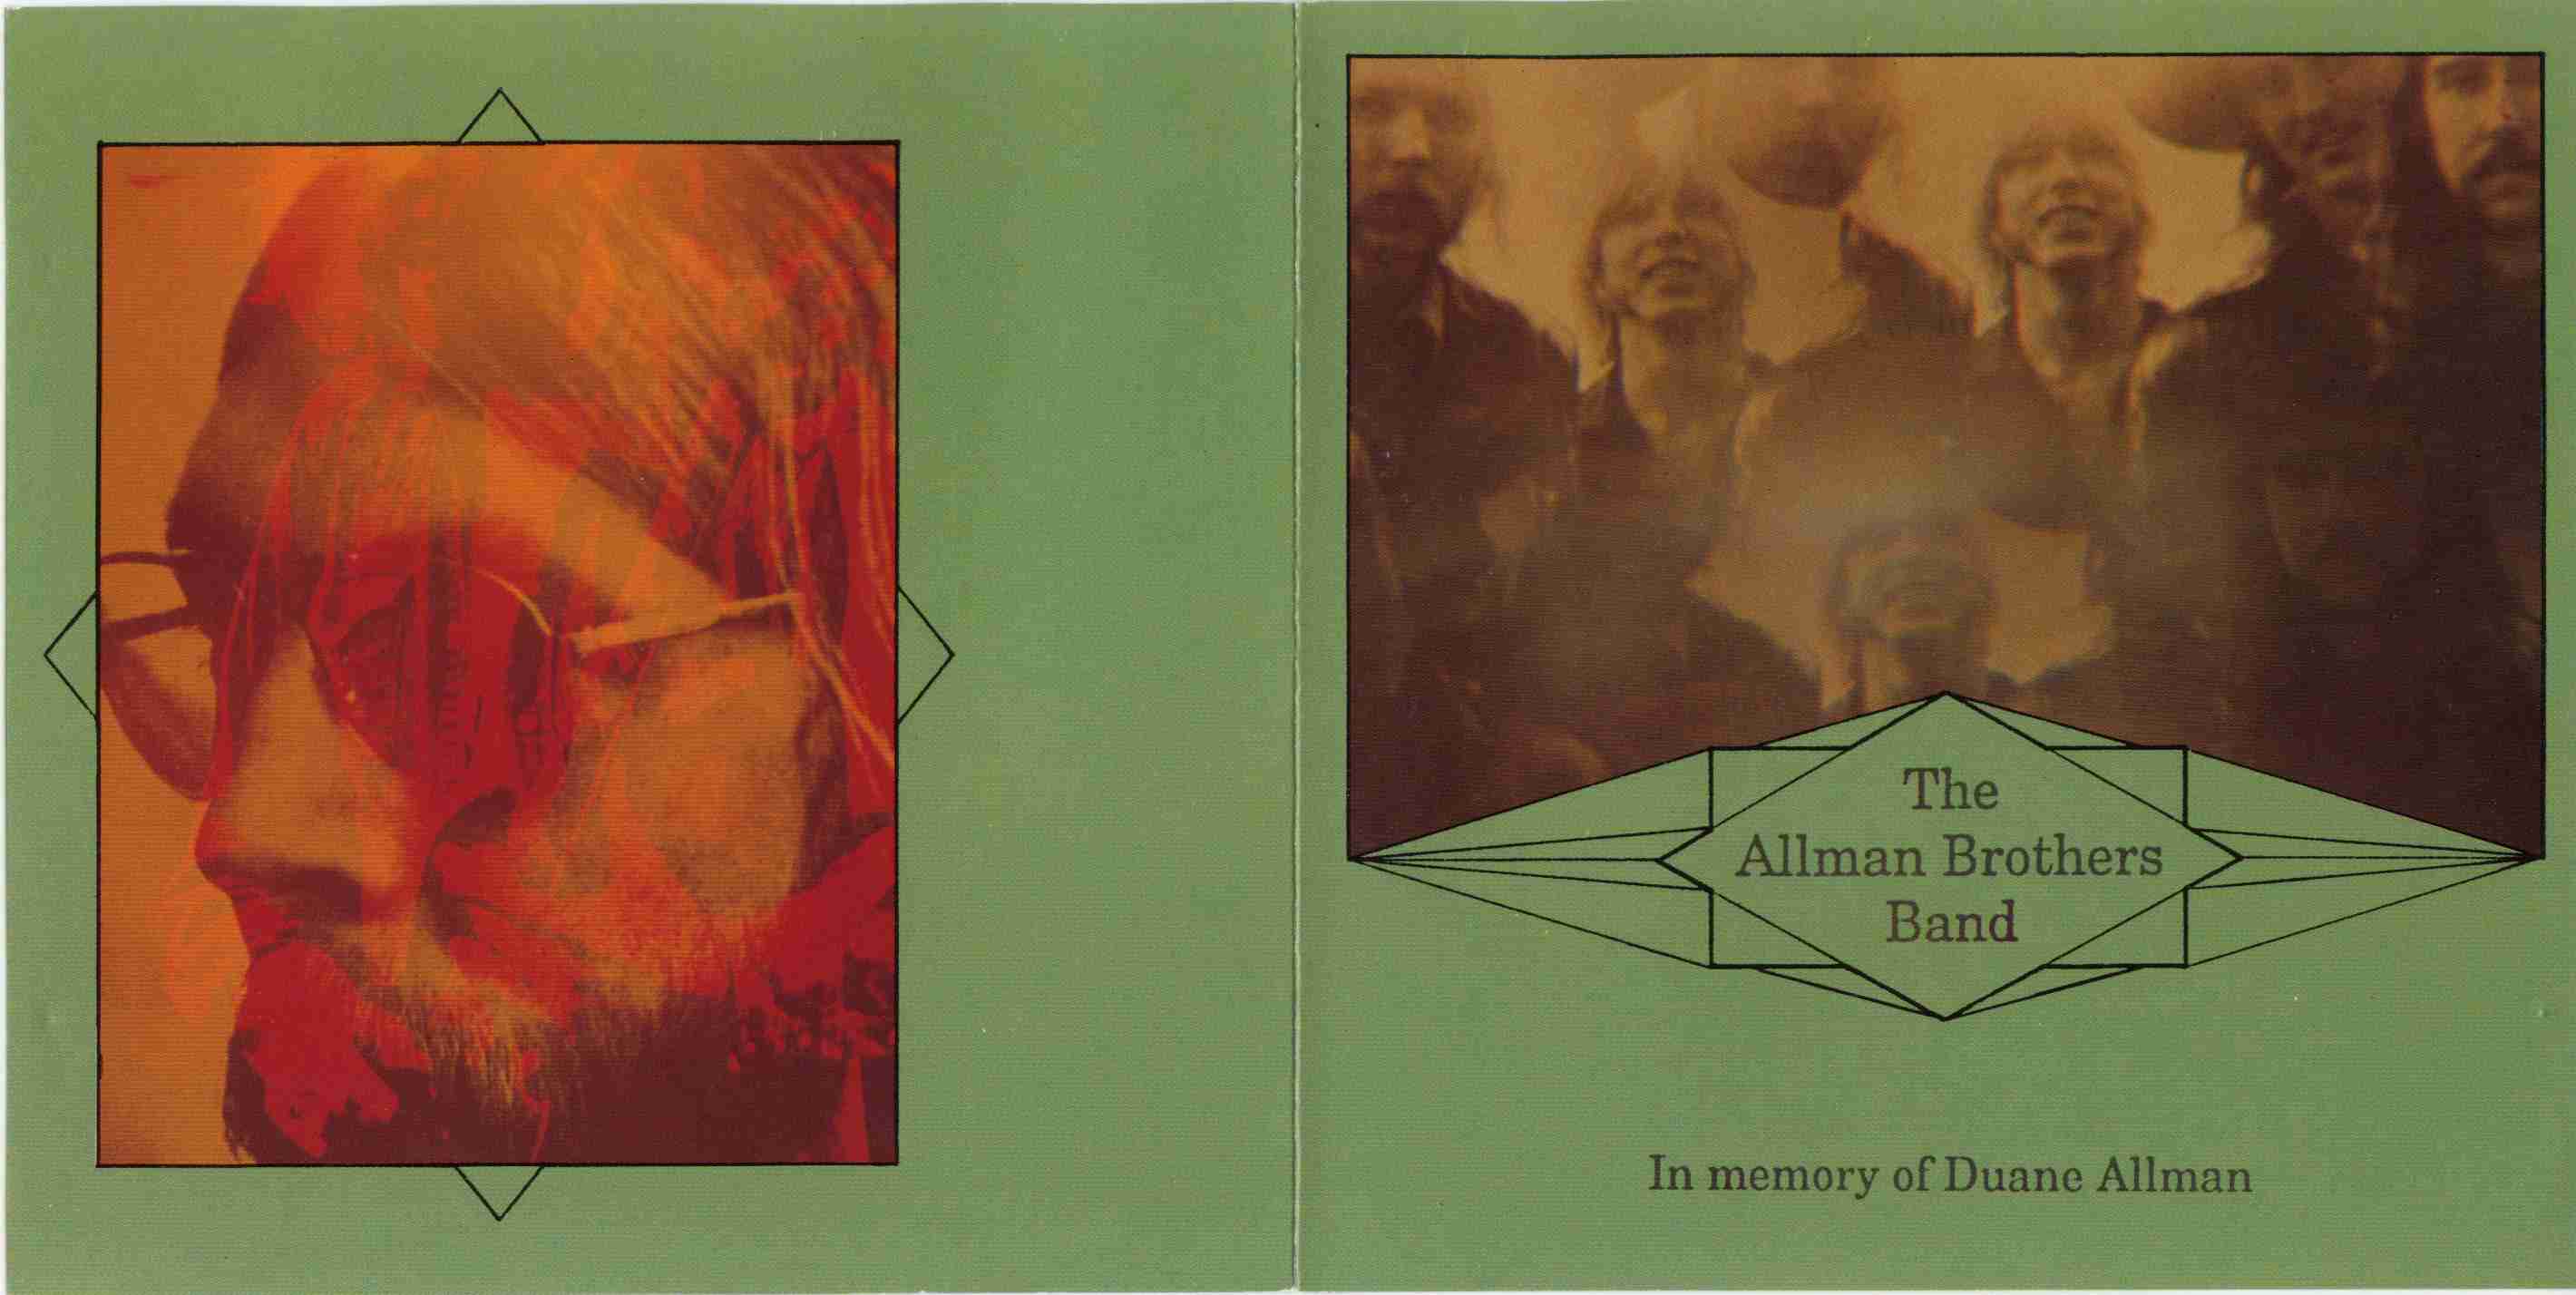 1971-06-26-In_memory_of_Duane_Allman-front